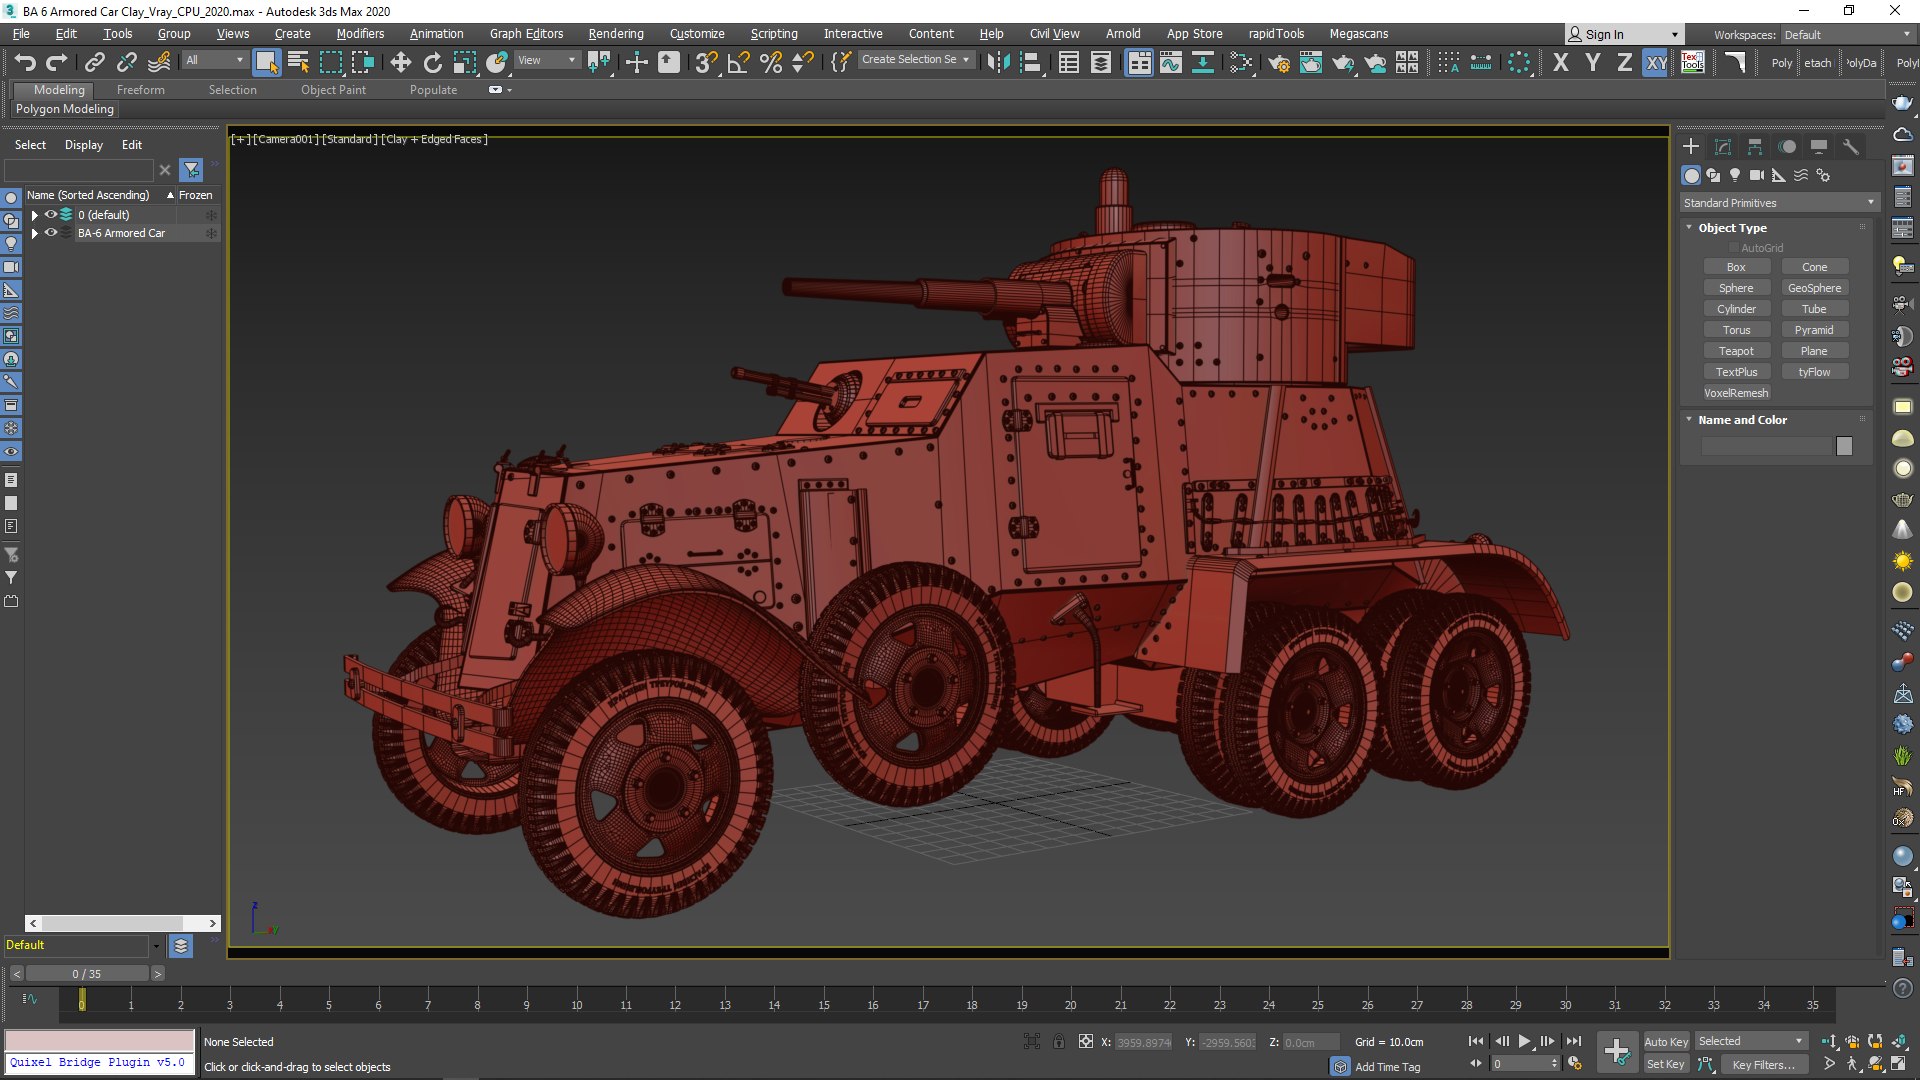 Armored Car 2, Software